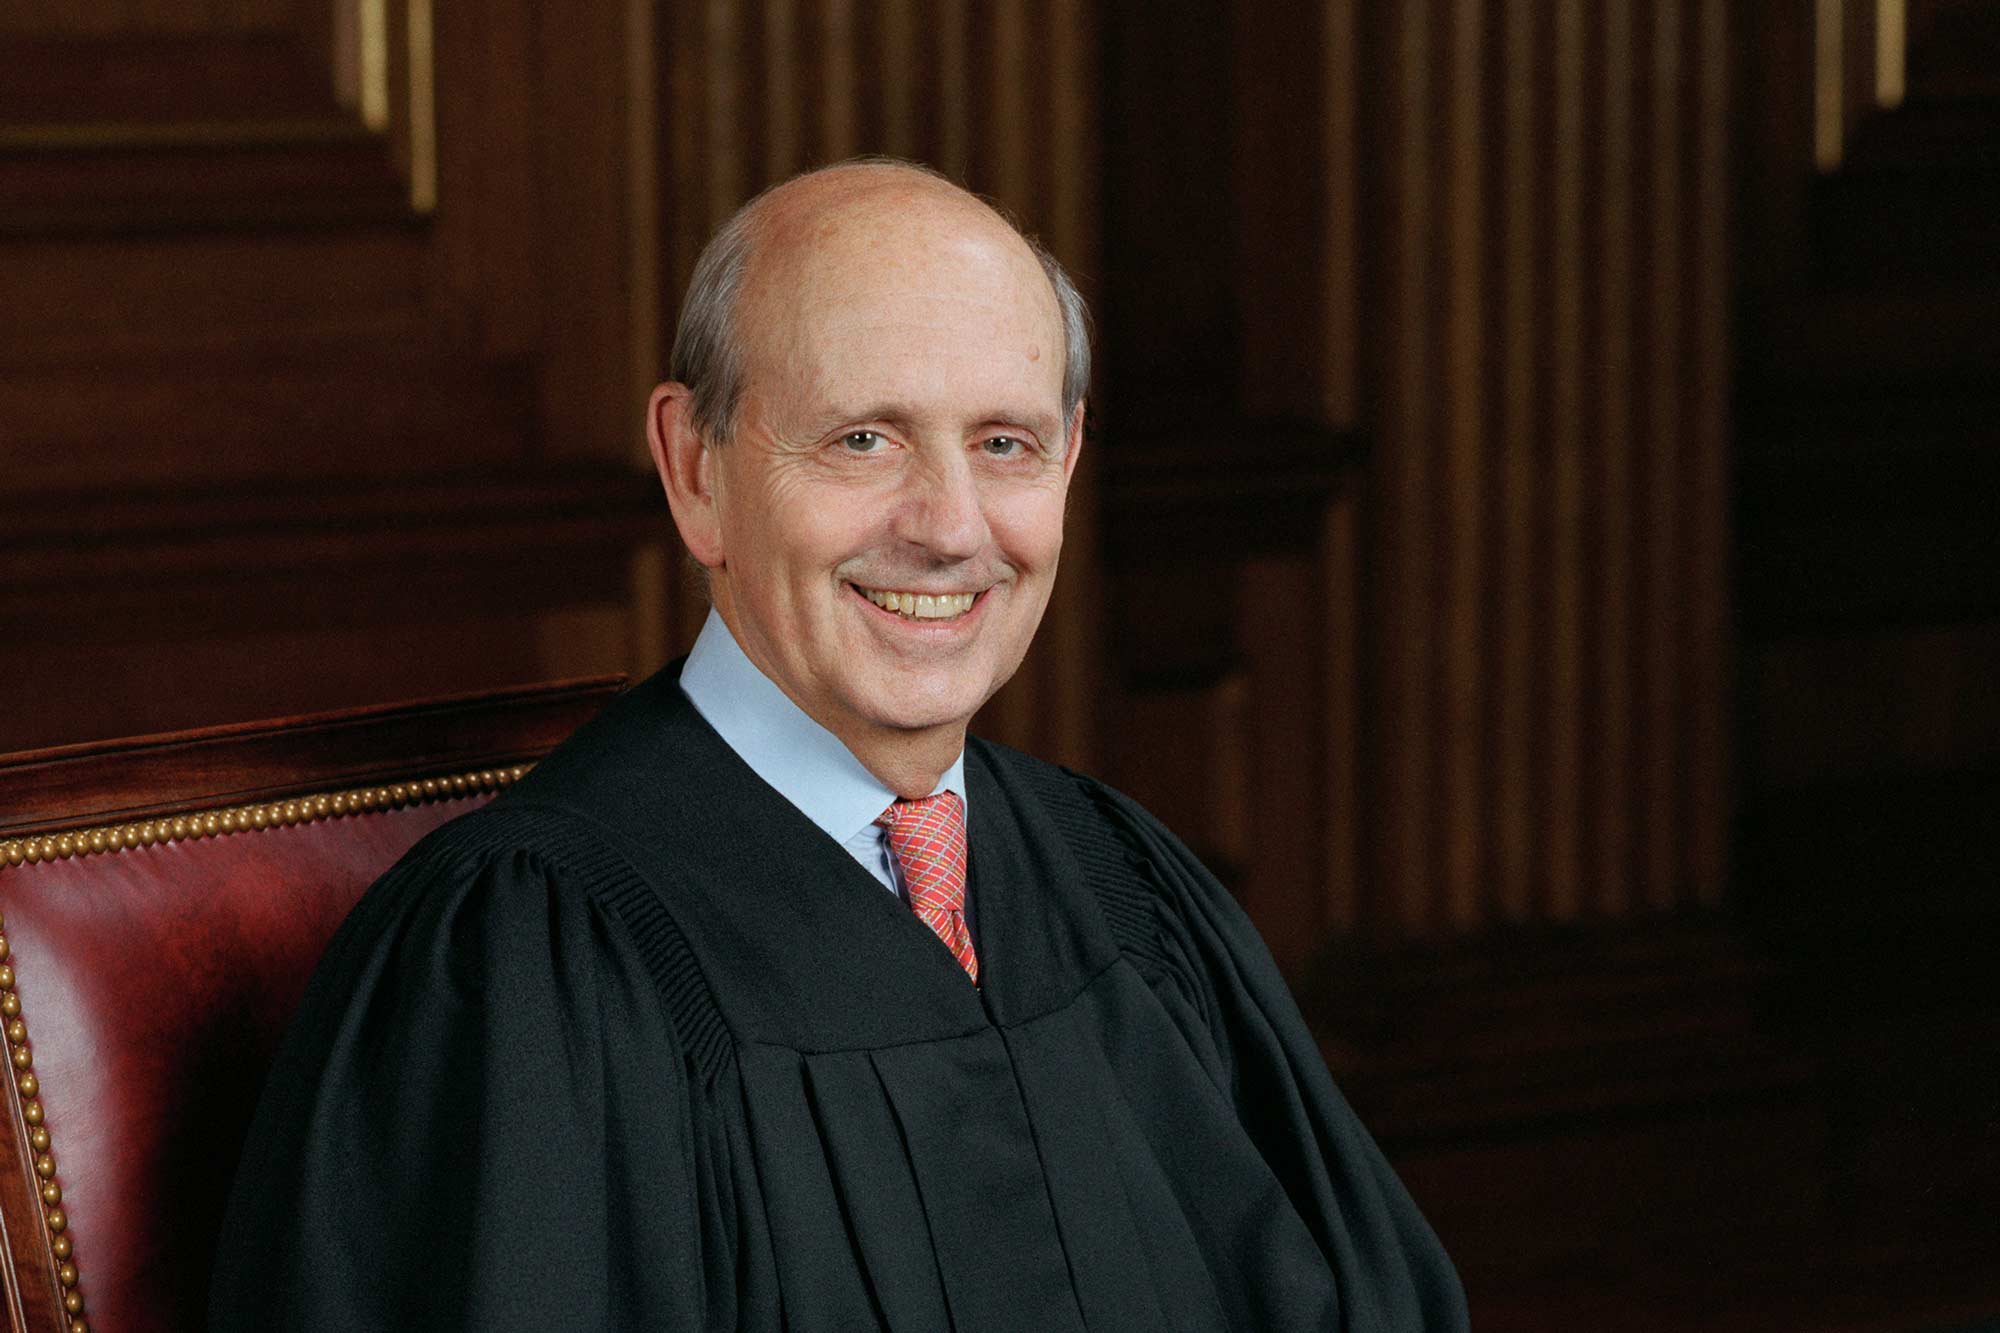 Portrait of U.S. Supreme Court Justice Stephen G. Breyer